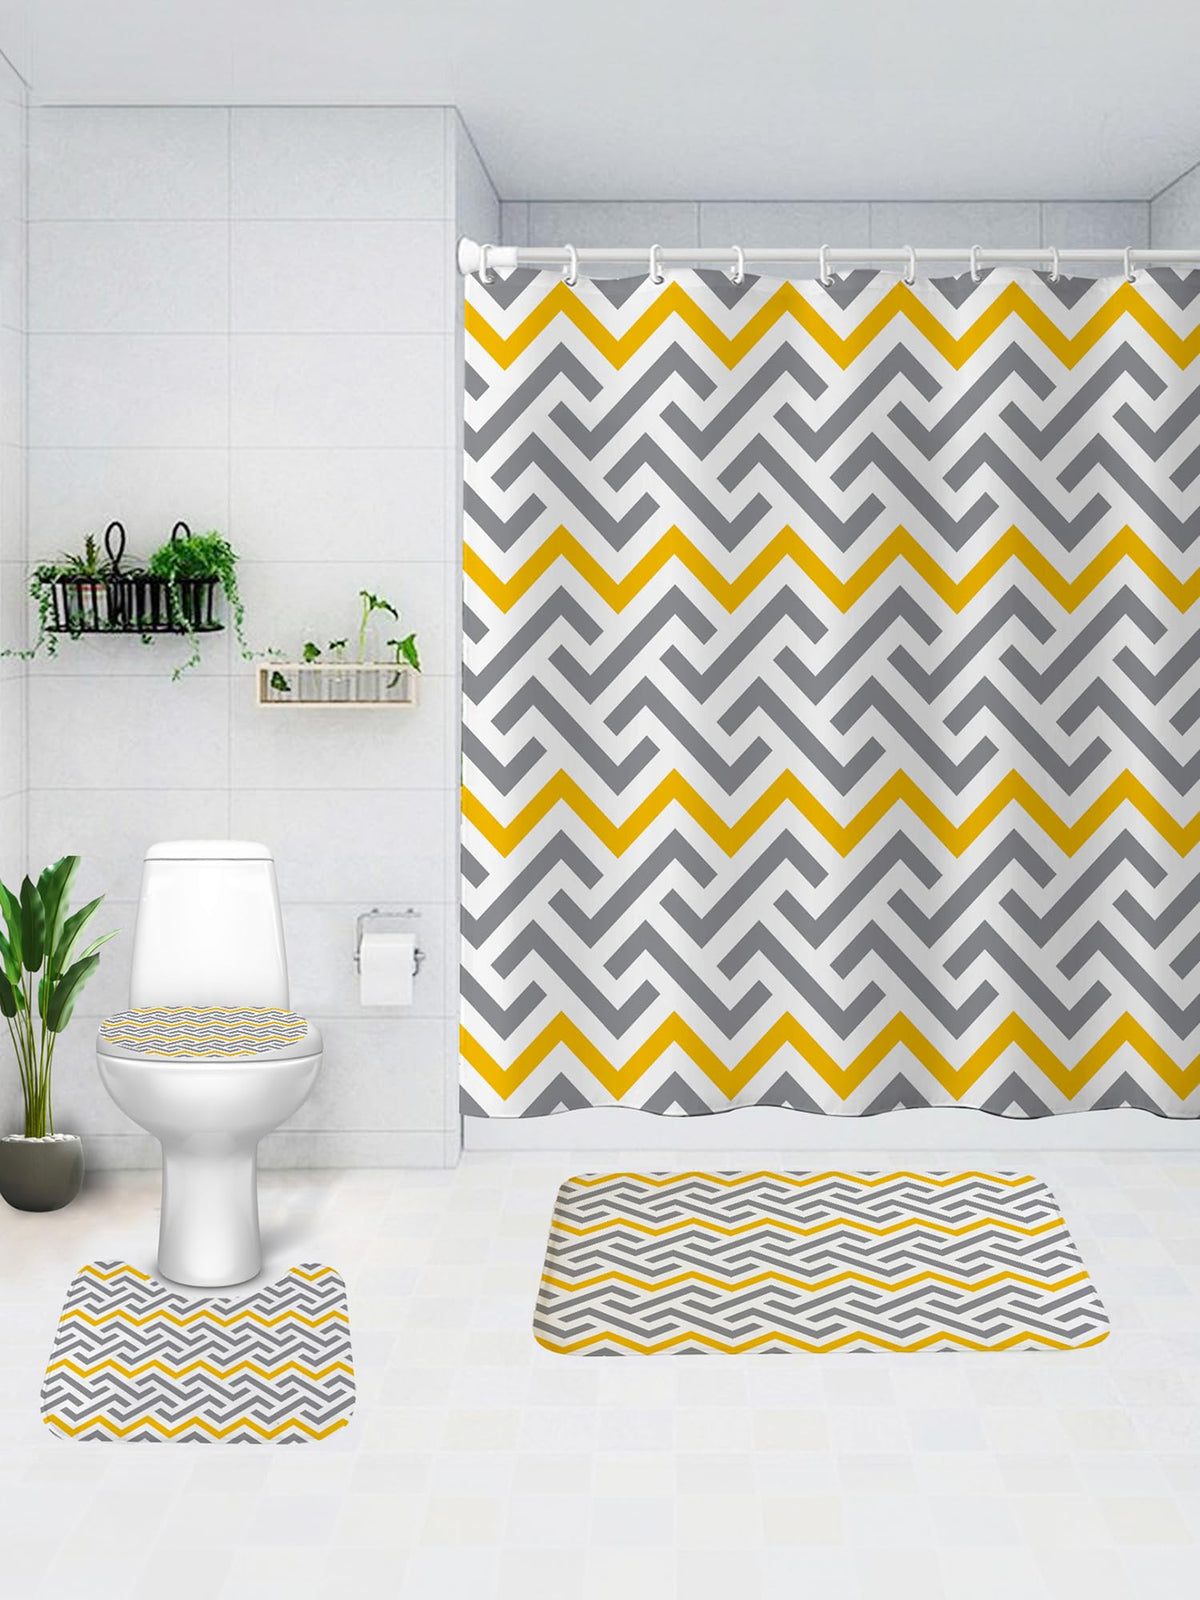 SAVYA HOME Shower Curtain (1) & Bathroom Mat (2) Set, Shower Curtains for Bathroom I, Waterproof Fabric I Anti Skid Mat for Bathroom Floor I Yellow Grey Aztec, Pack of 3